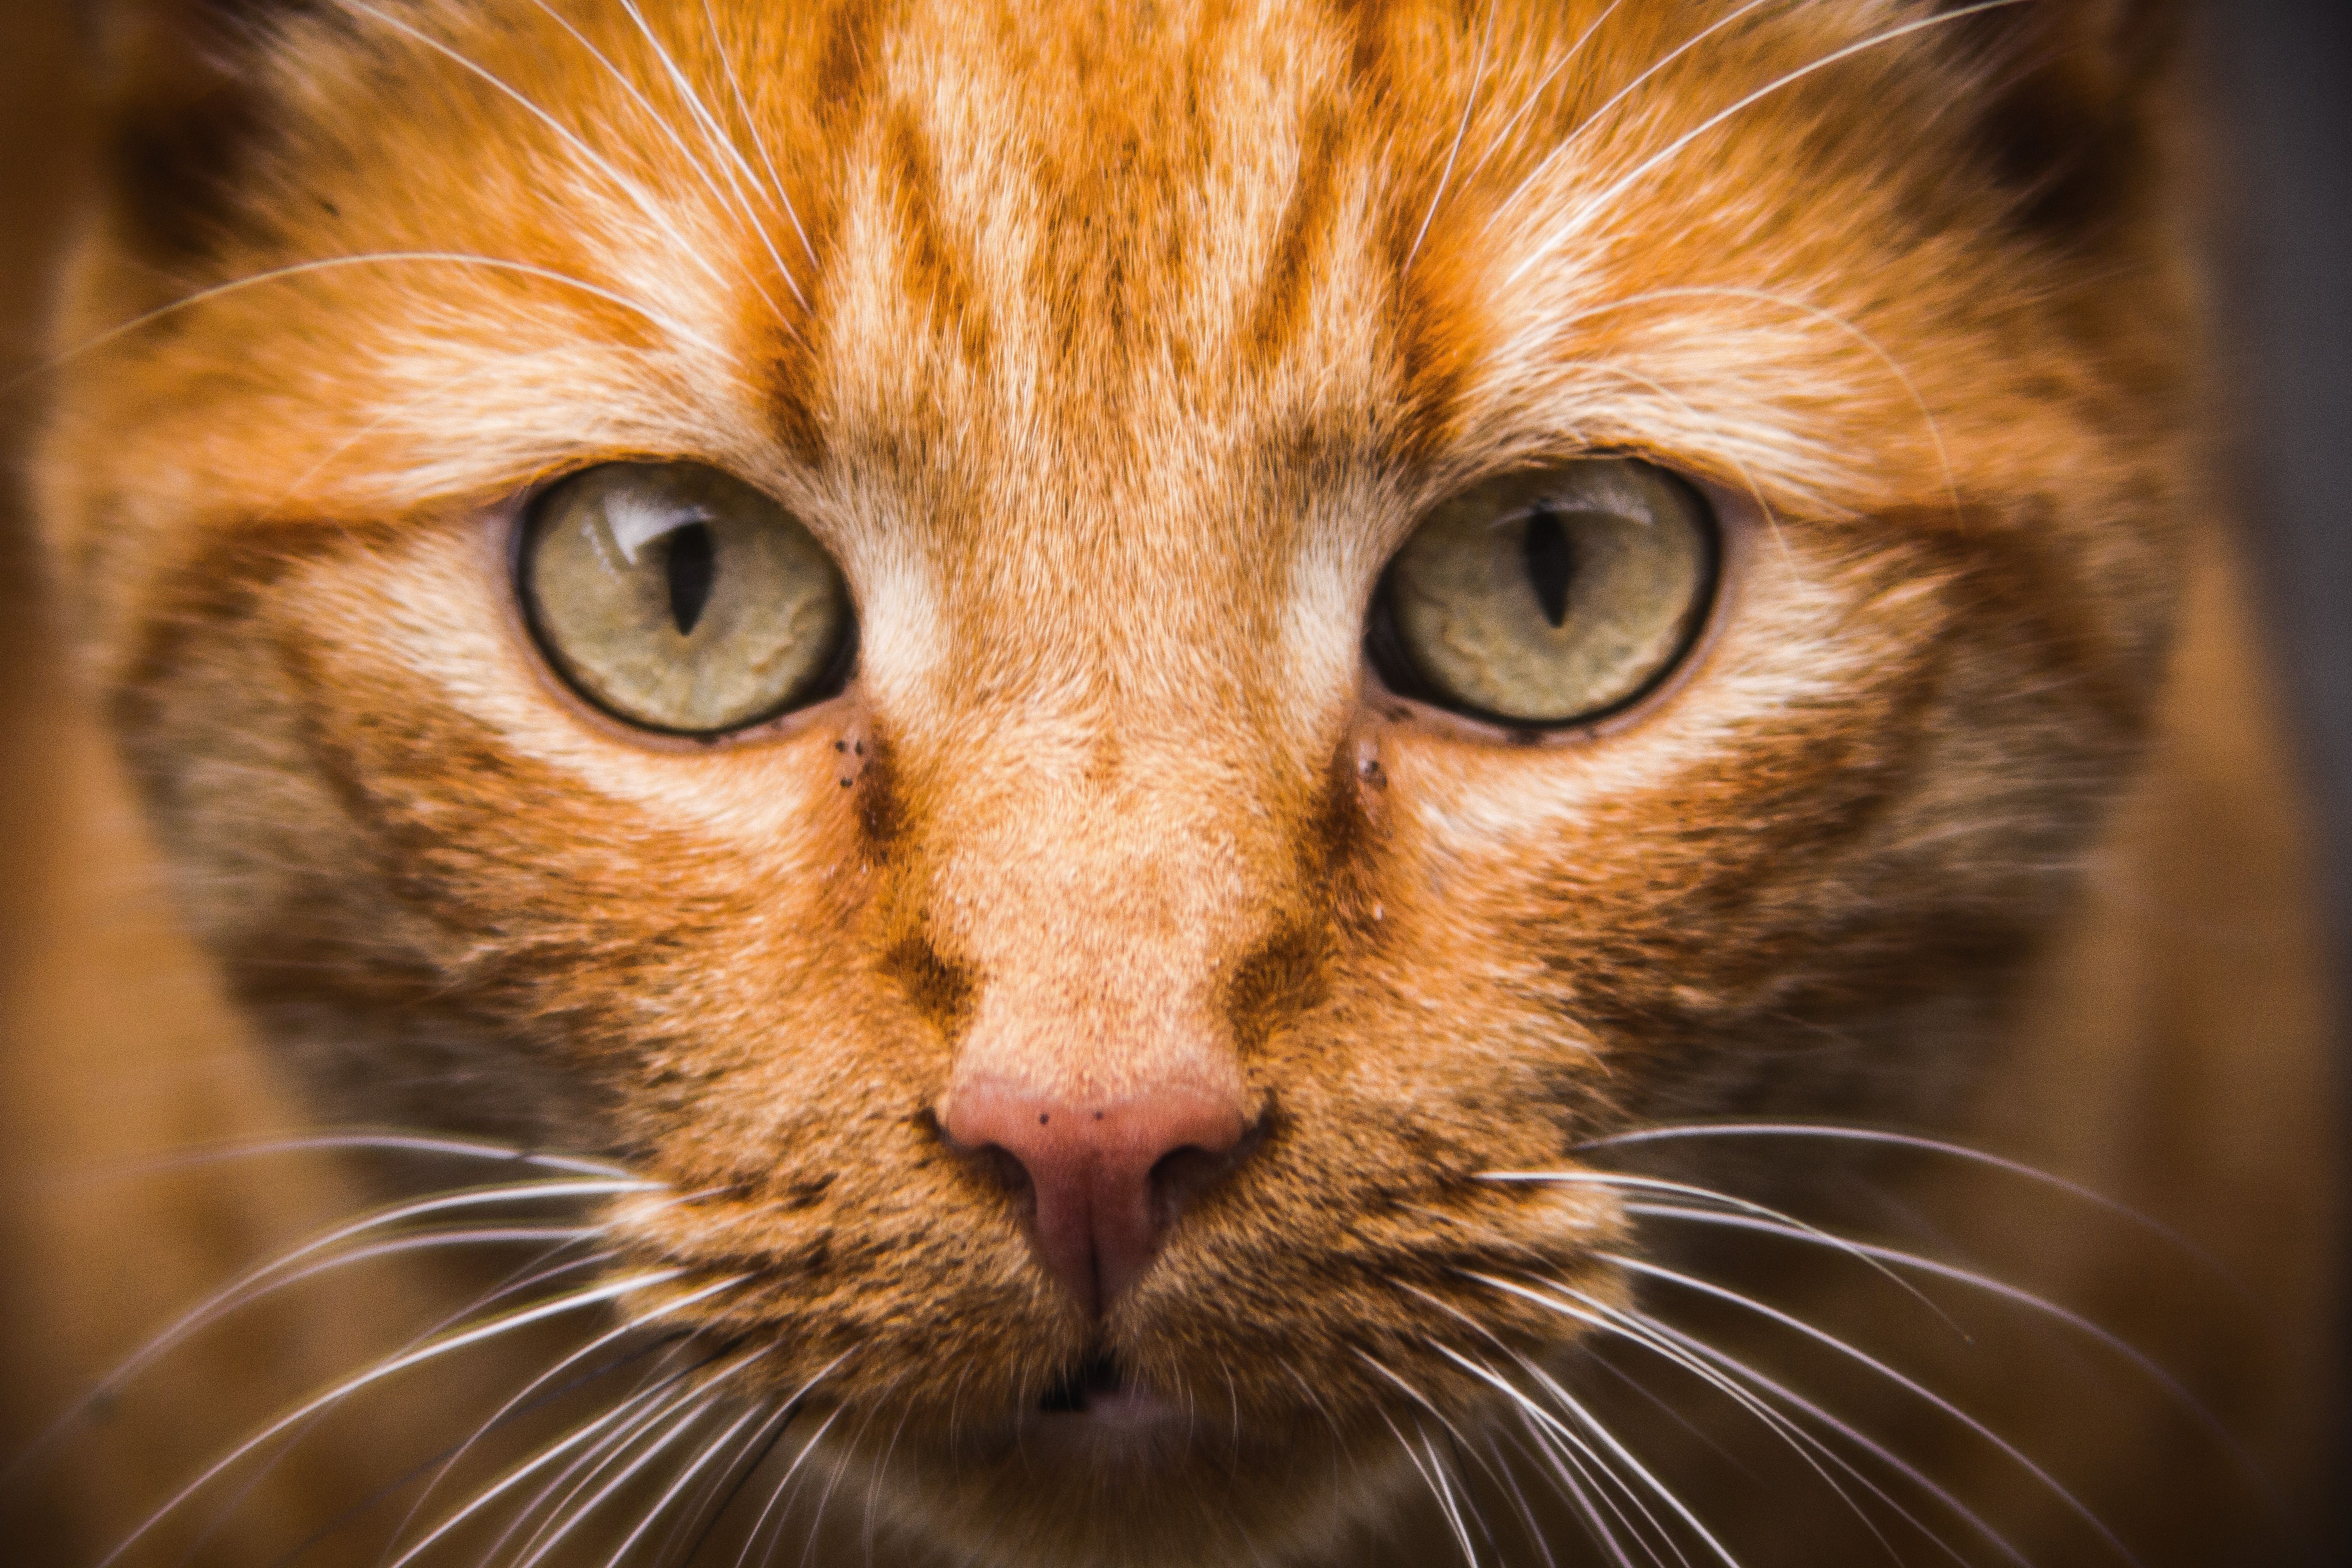 Cats Wallpaper Orange Cat Face Closeup | Animal Wallpaper ...